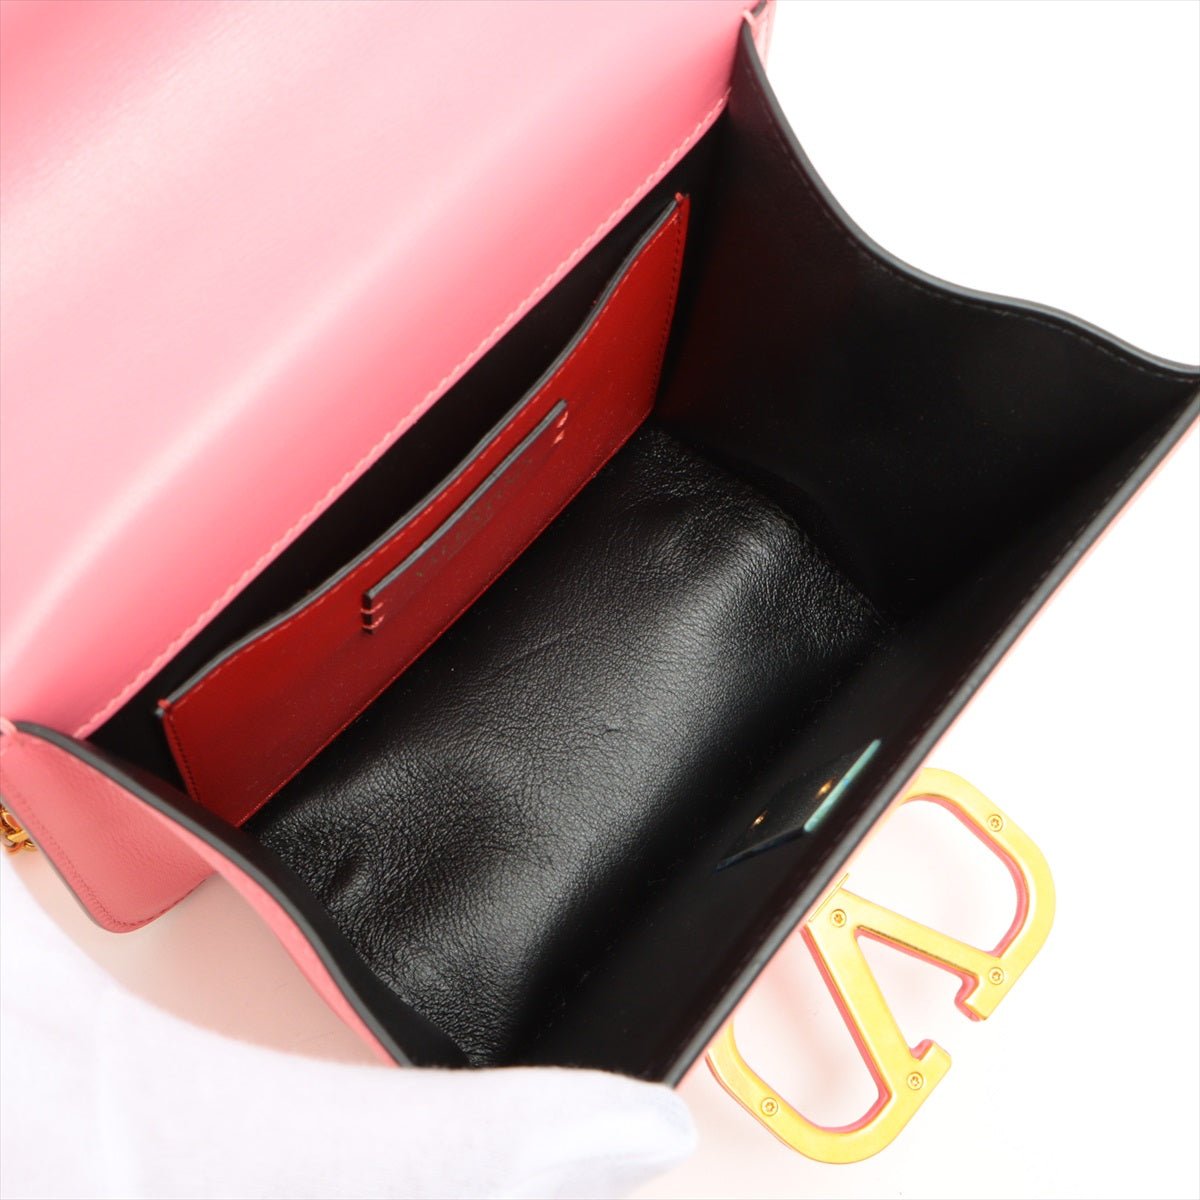 Valentino VSLING Handbag in Pink Grainy Calfskin Leather